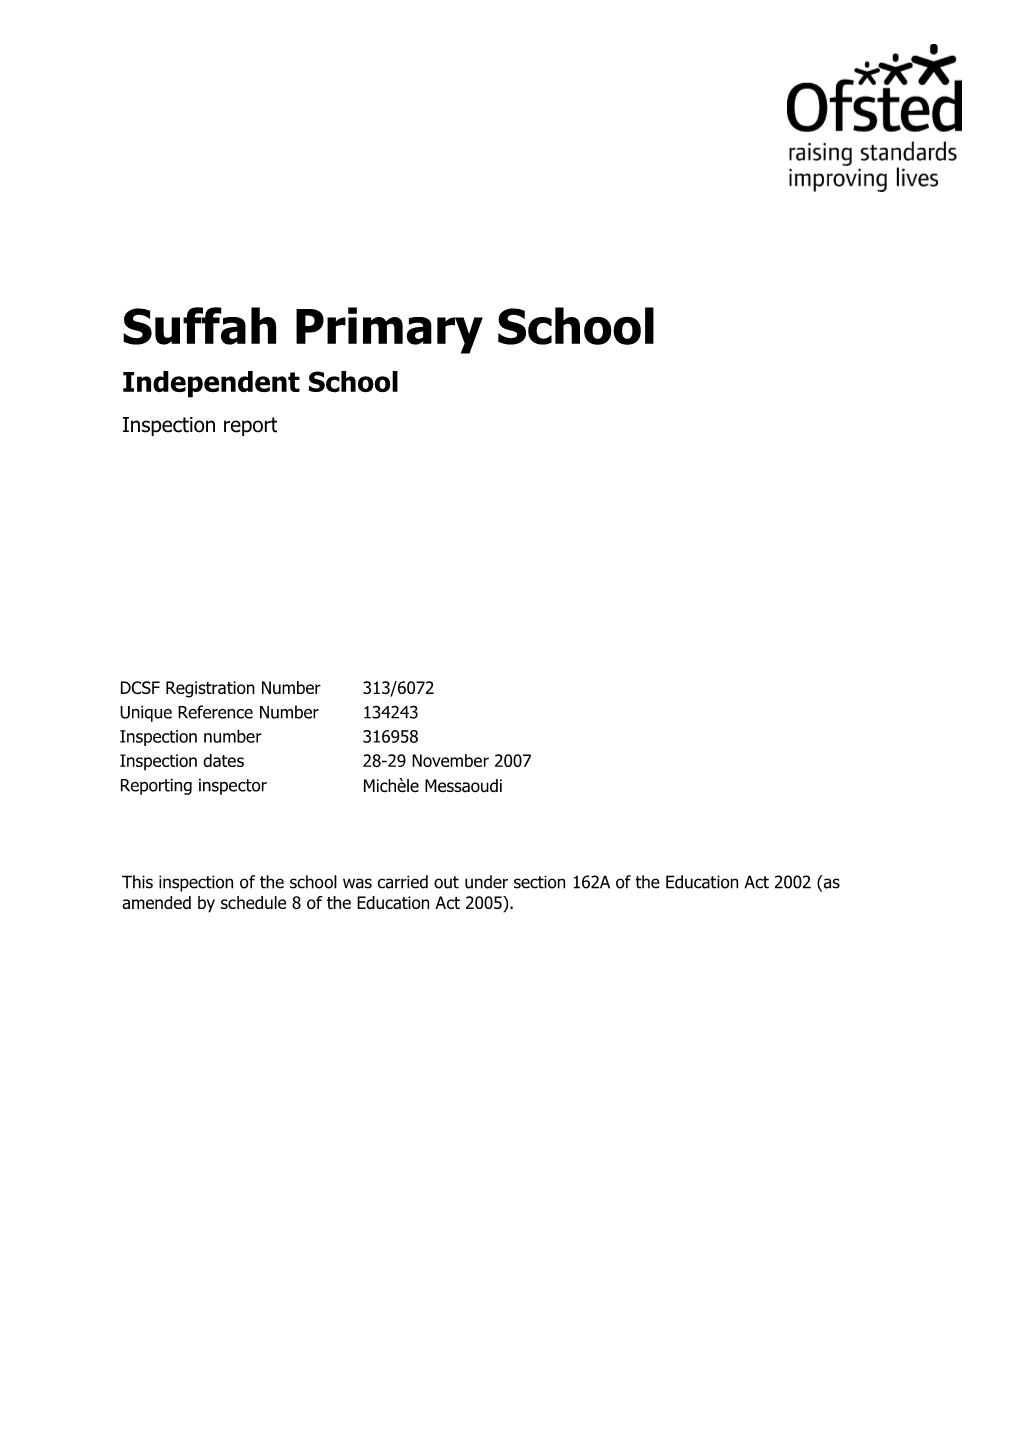 Suffah Primary School Independent School Inspection Report